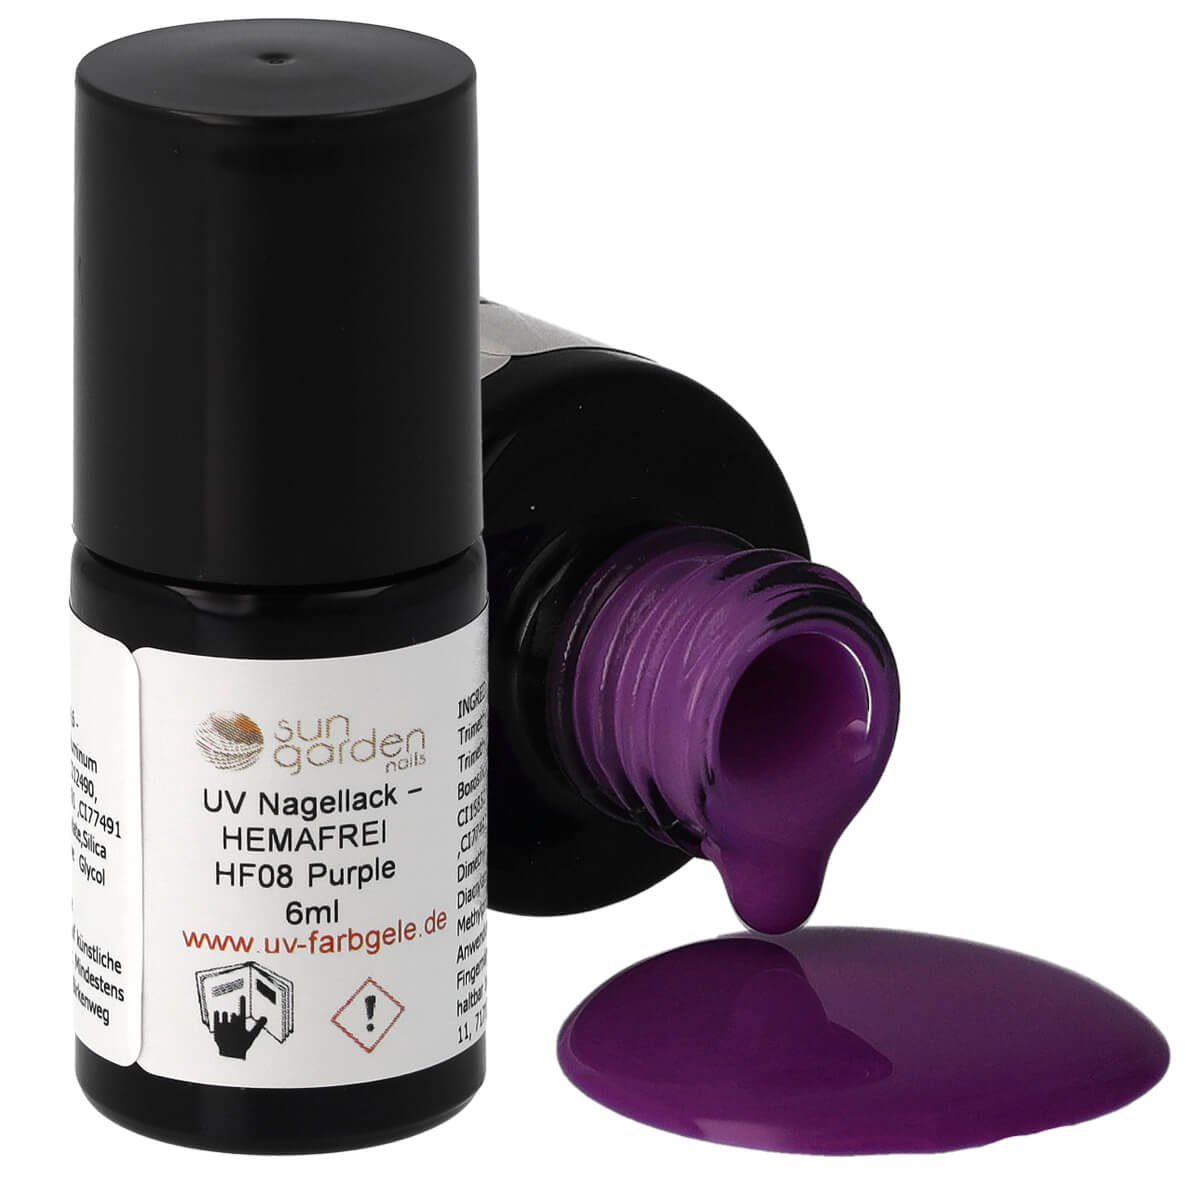 Sun Garden Nails Purple Nagellack - 6ml HF08 – UV HEMAFREI Nagellack